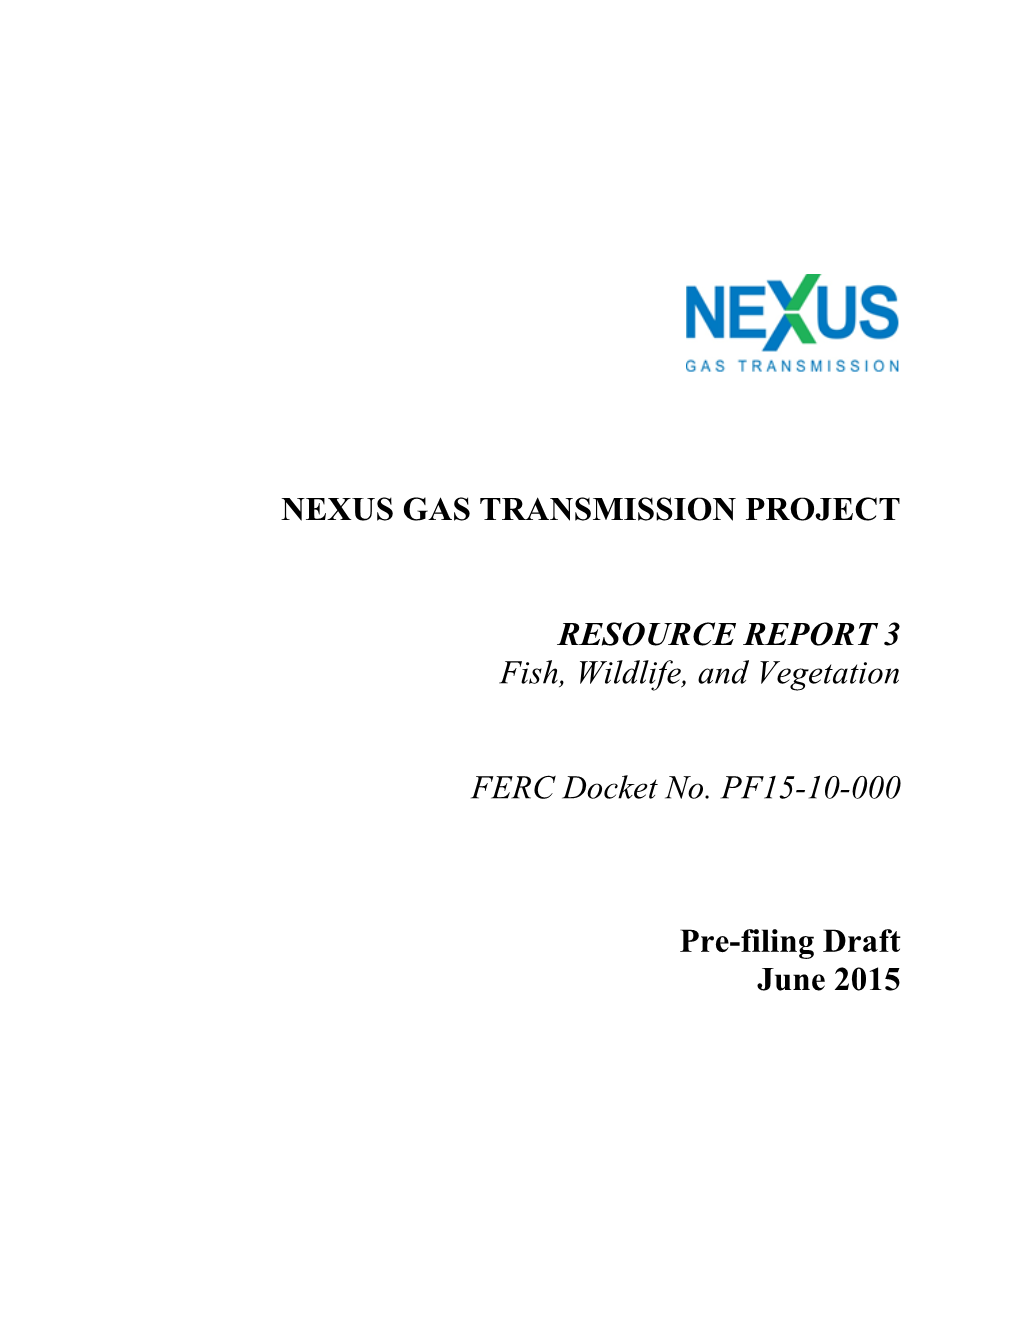 Resource Report 3 – Fish, Wildlife, and Vegetation Ii NEXUS PROJECT June 2015 Pre-Filing Draft